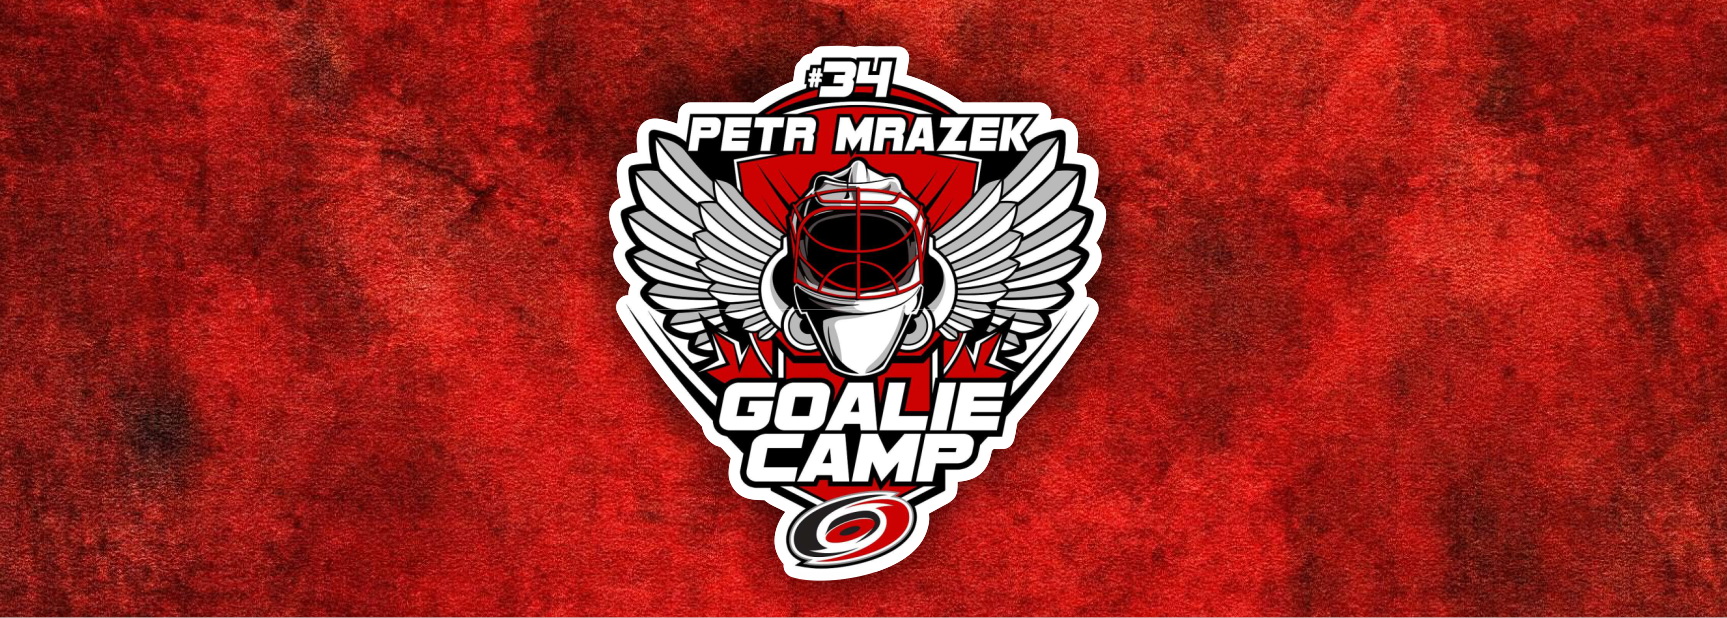 Branksk kola Petra Mrzka Goalie Camp 2020 - Brno 16. - 19.7.2020